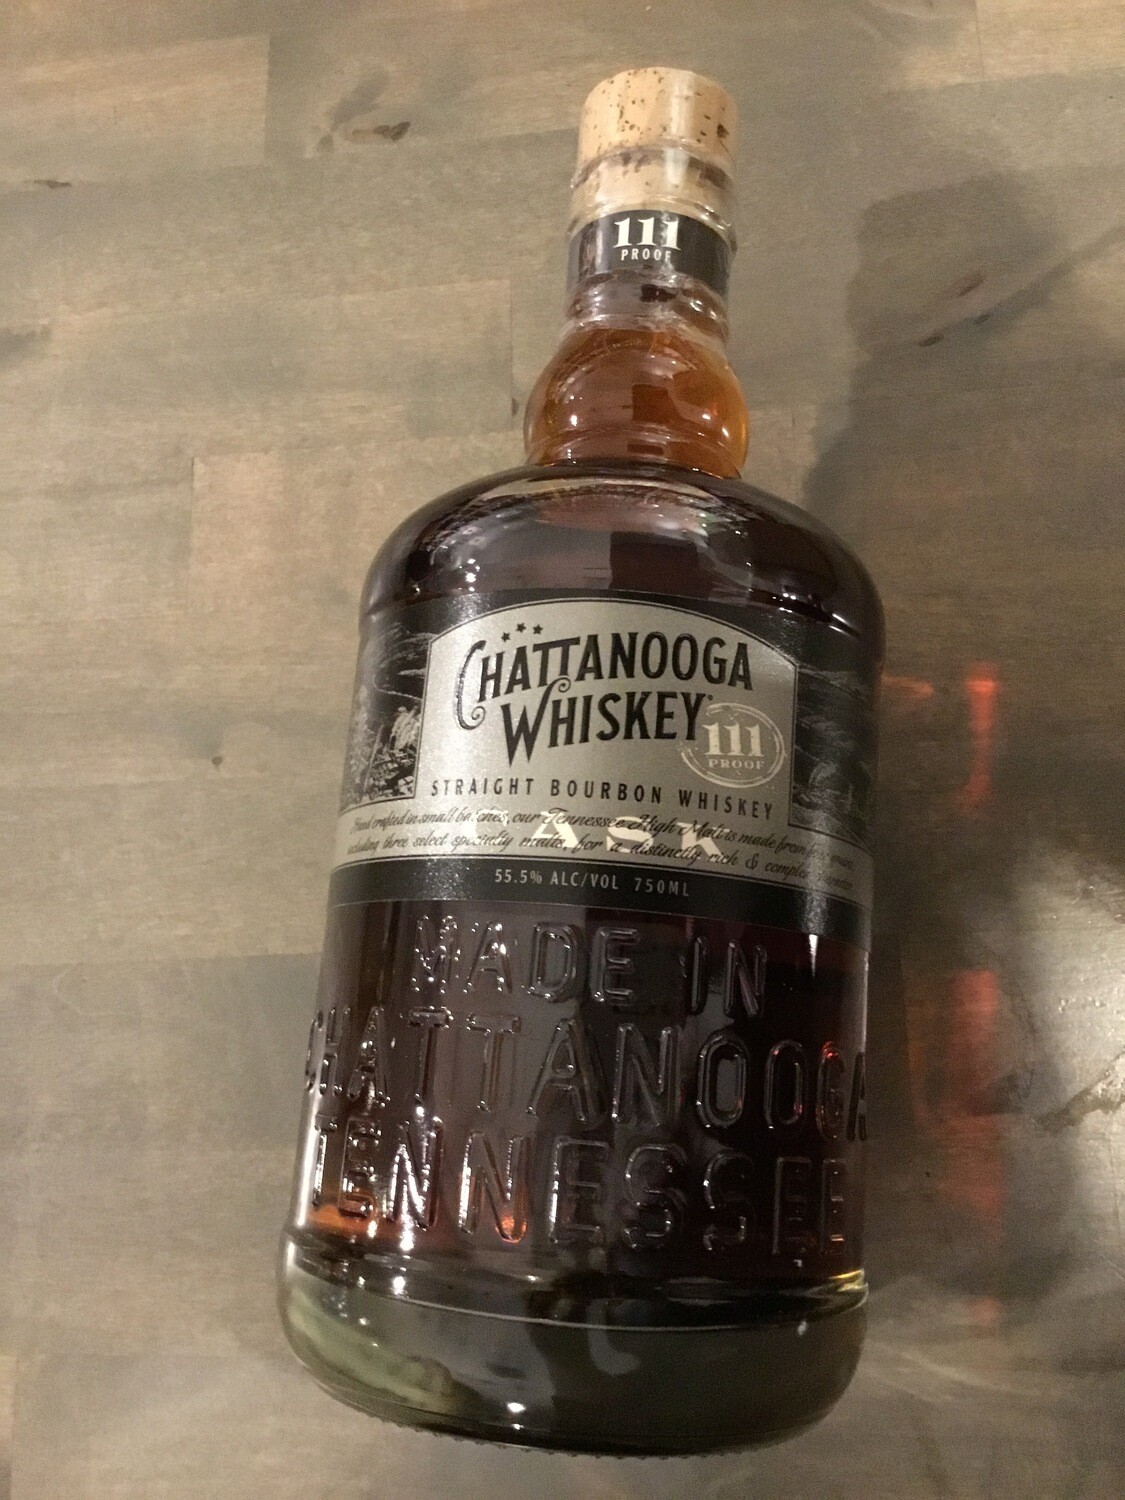 Chattanooga 111 Whiskey Straight Bourbon